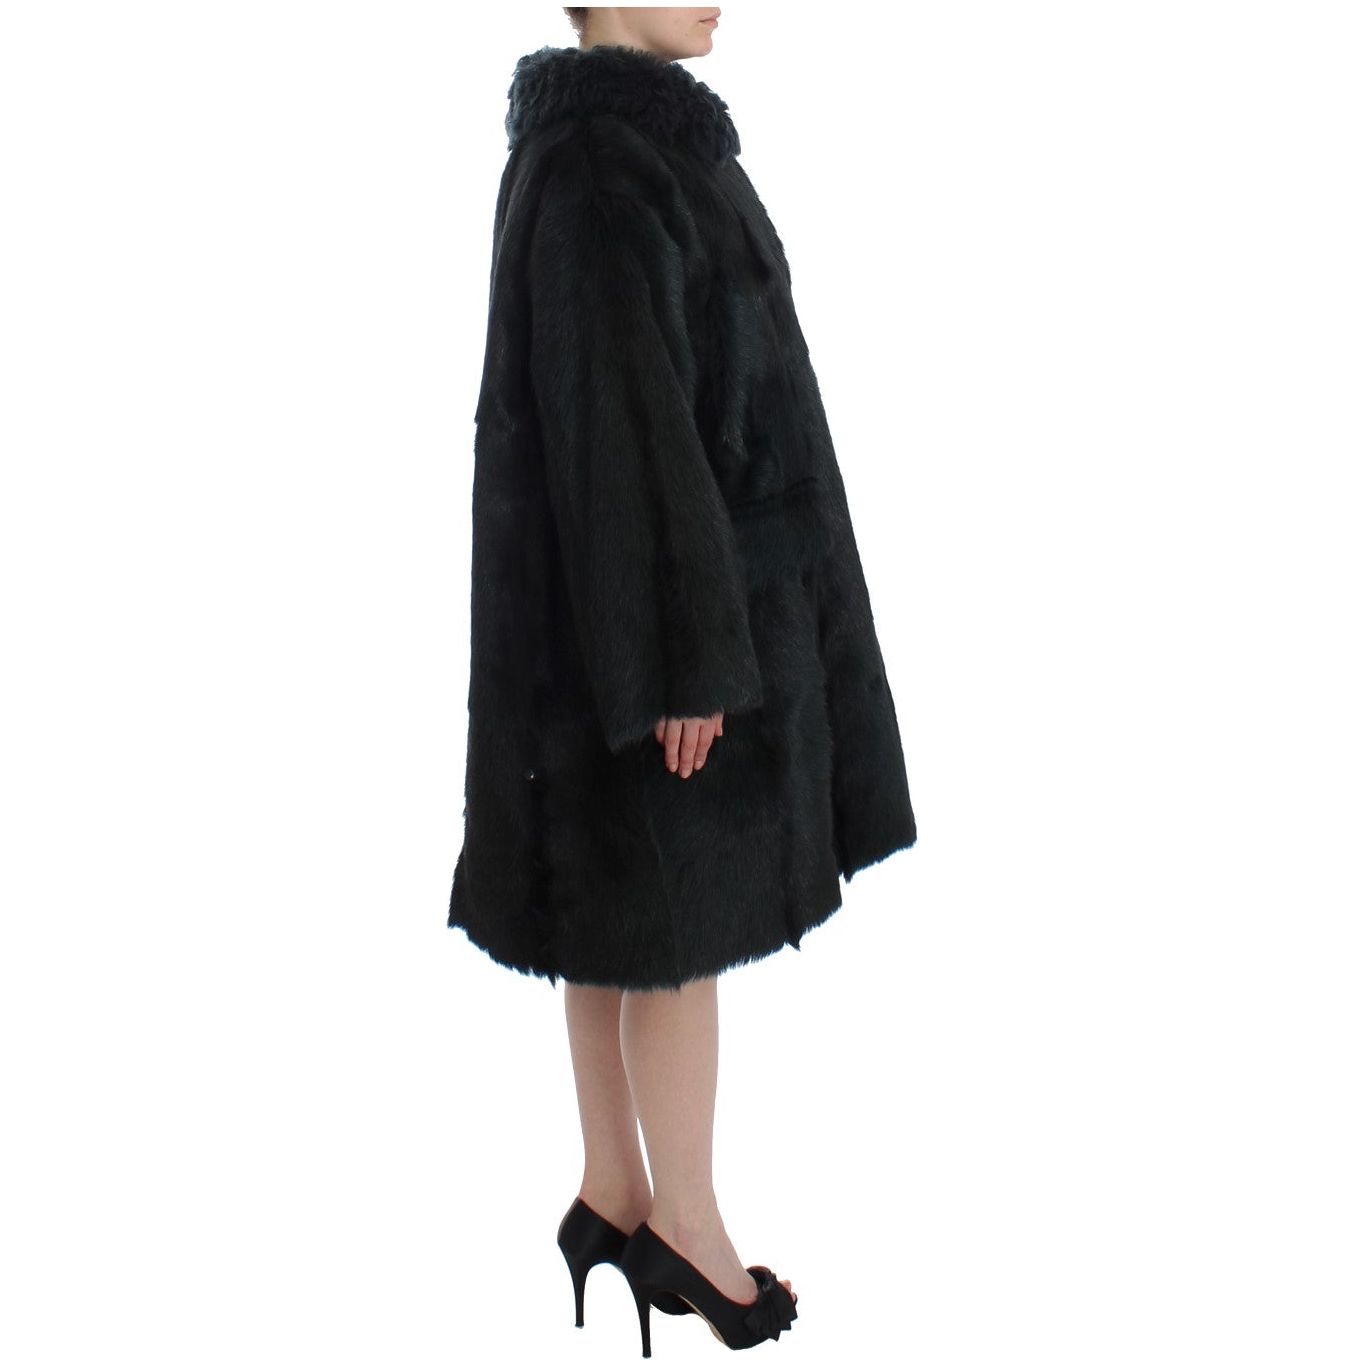 Dolce & Gabbana Exquisite Shearling Coat Jacket black-goat-fur-shearling-long-jacket-coat 62390-black-goat-fur-shearling-long-jacket-coat-4.jpg